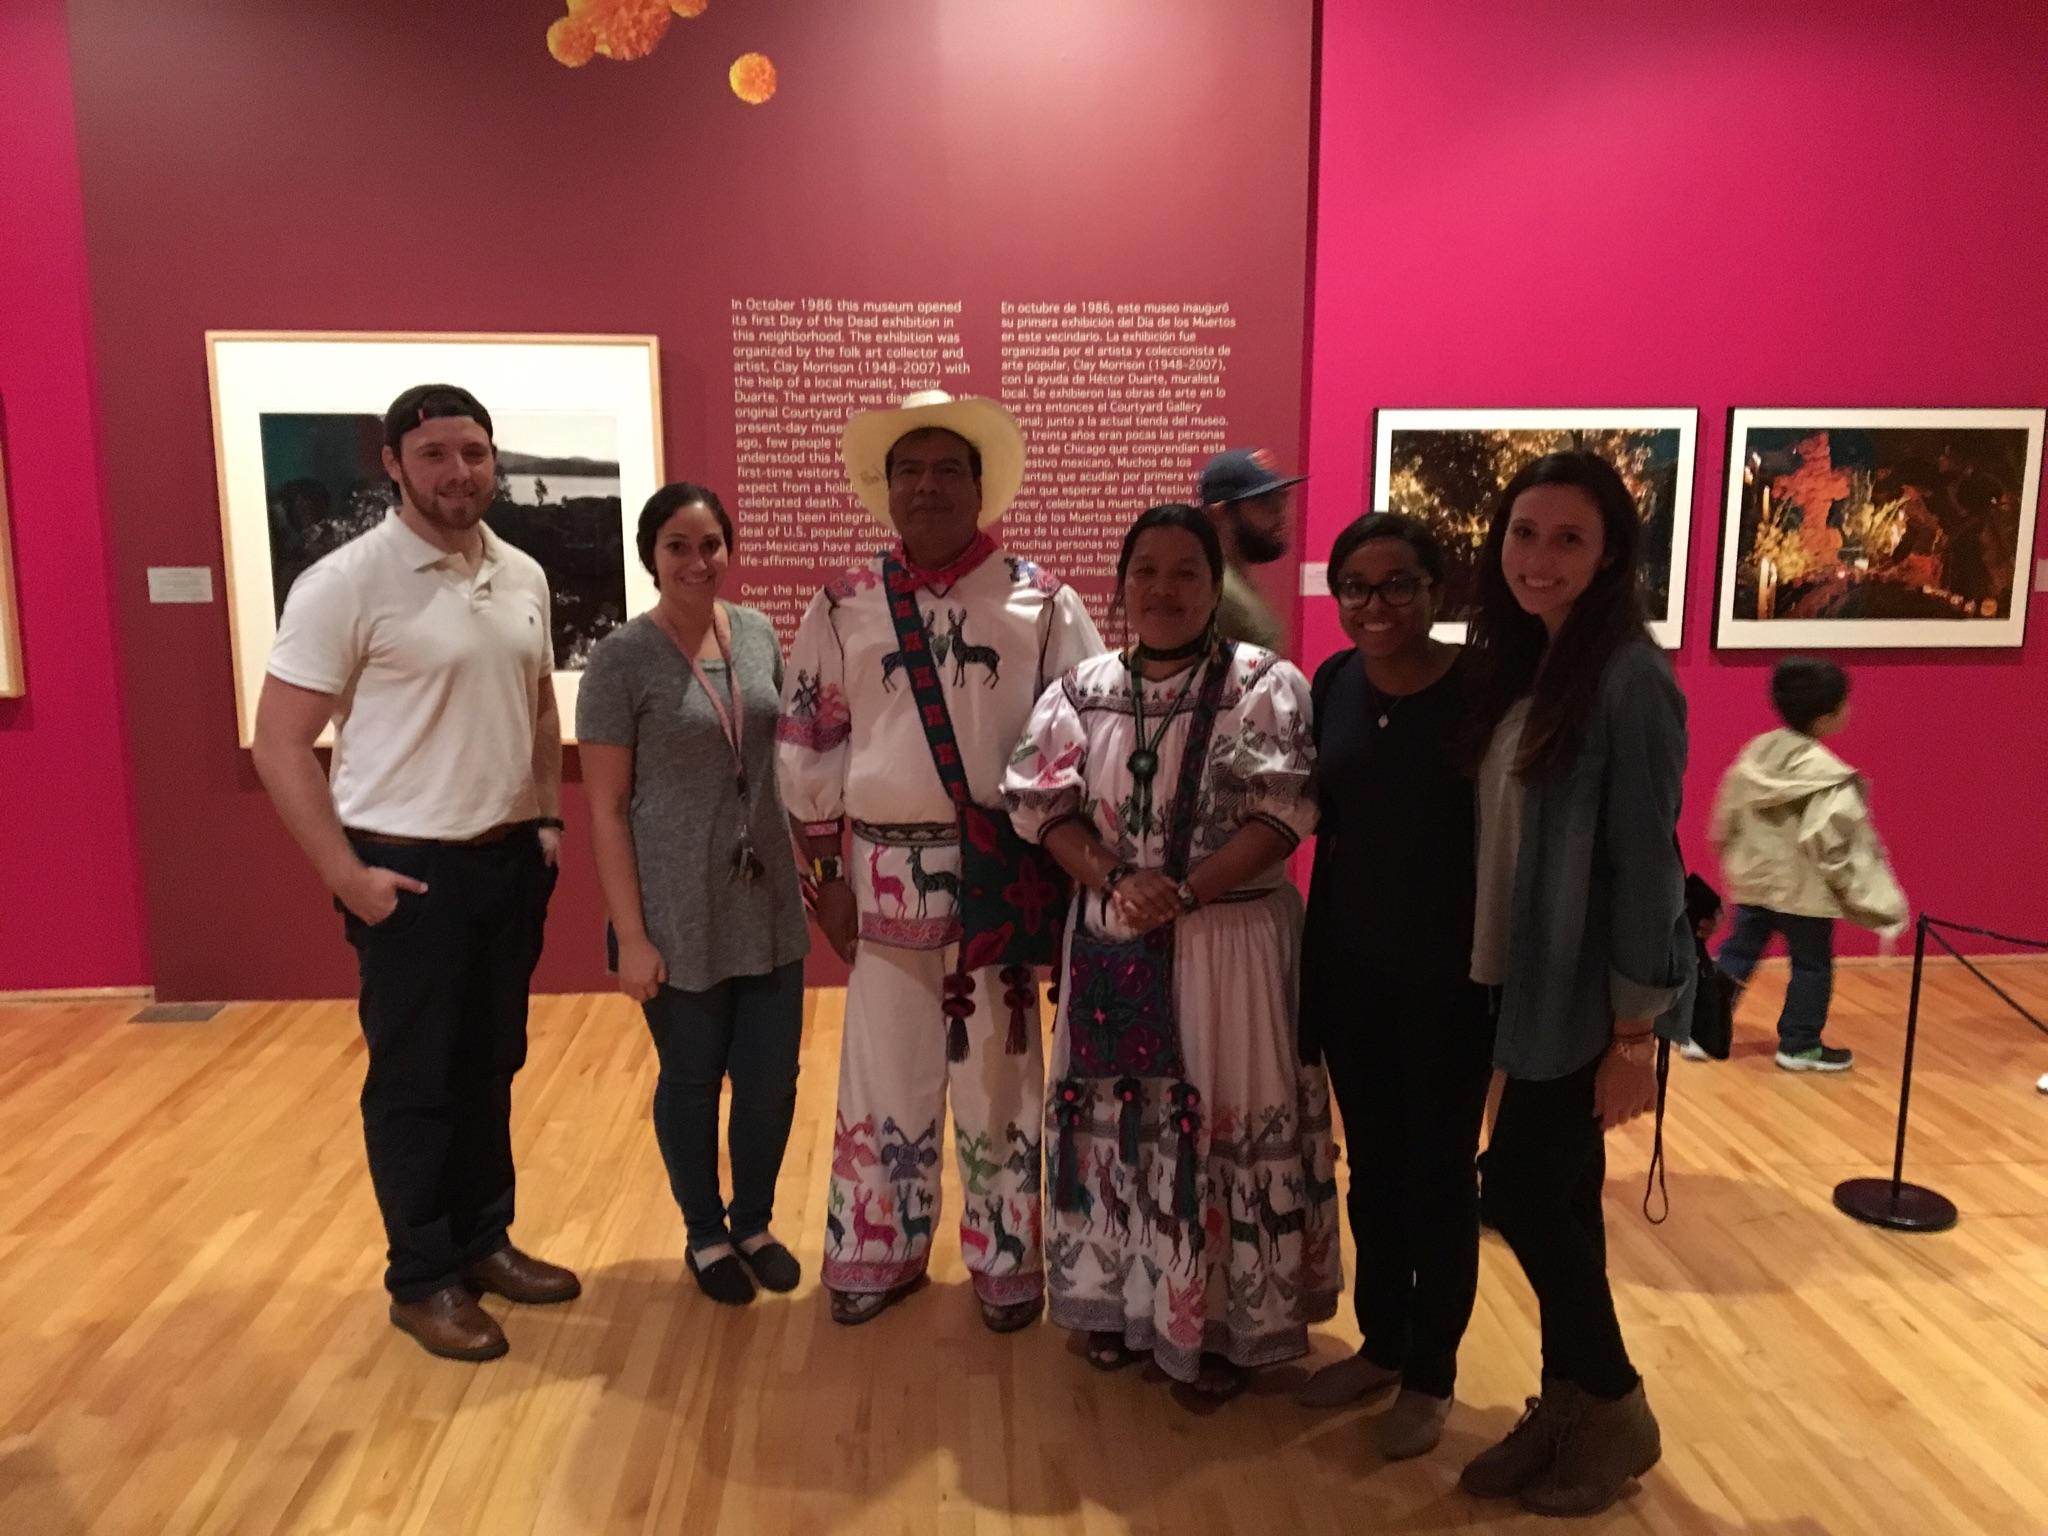 Illinois State preservice teachers alongside Nayarita folkloric performers. Left to right: Joseph Cardinal, Bianca Baez, Jasmine Grullon, and Elizabeth Carroll.